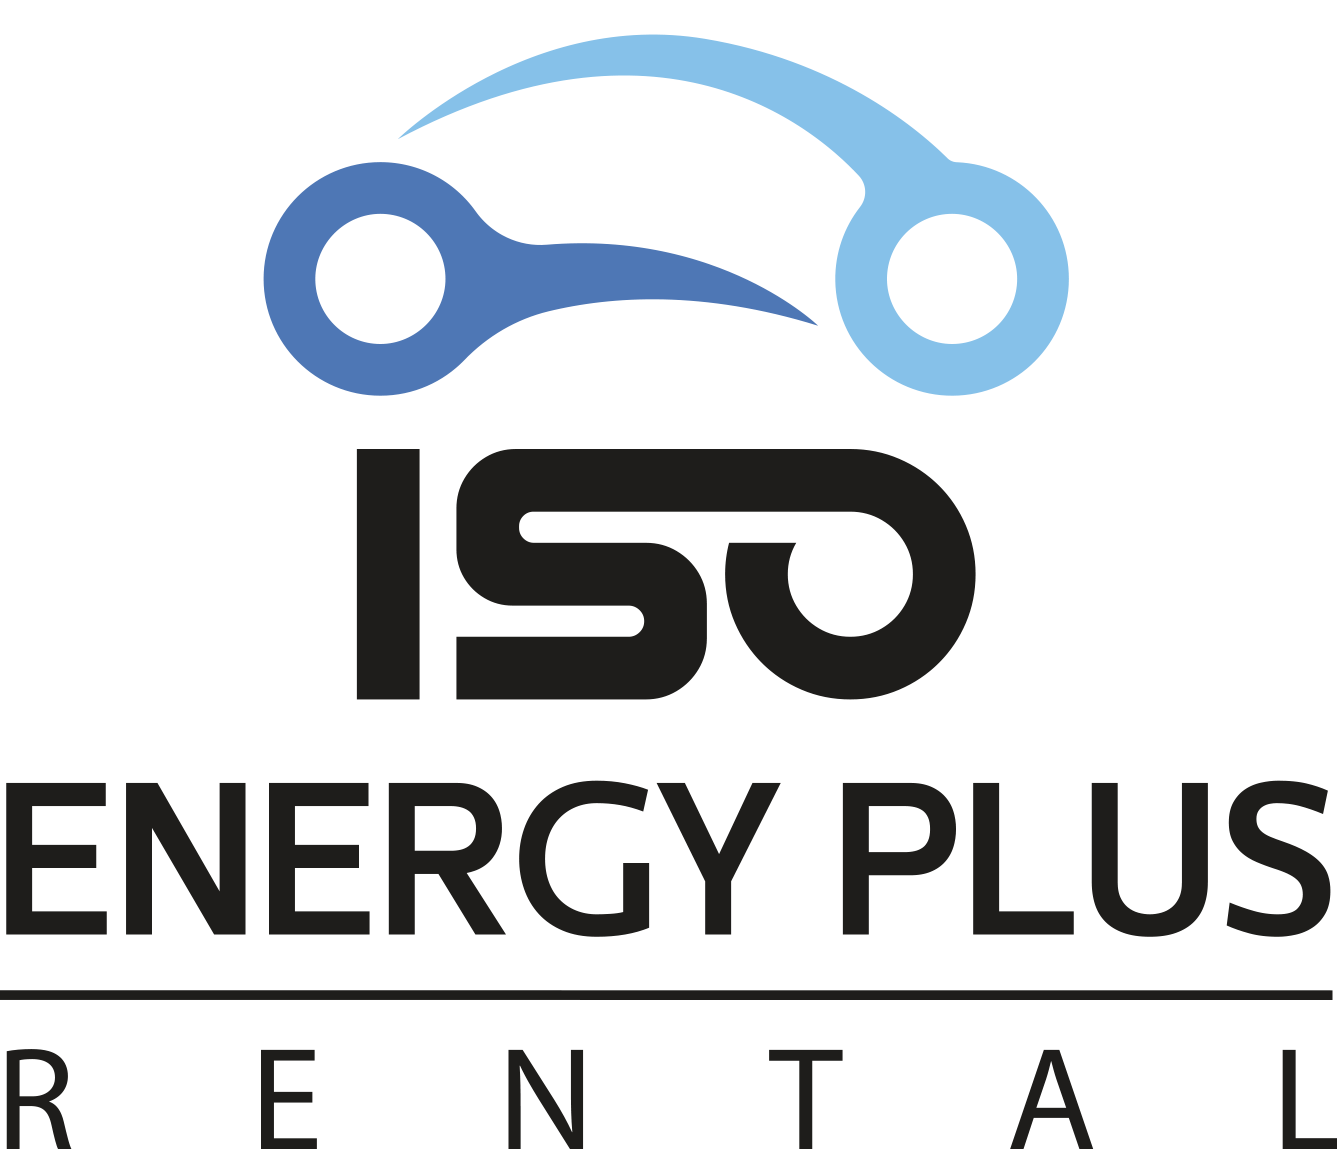 ISO Energy Plus